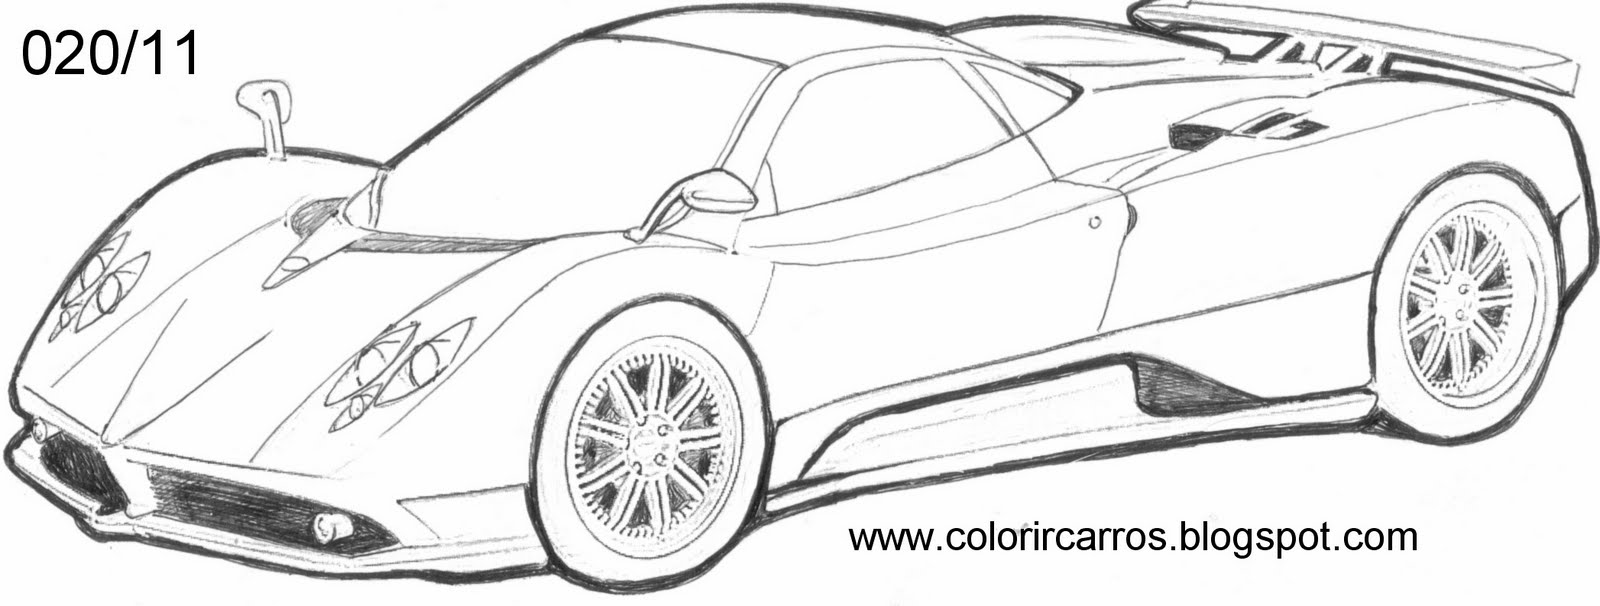 de PROFESSOR ADILSON - colorir carros  Desenhos para colorir carros,  Esboço bicicleta, Carros para colorir